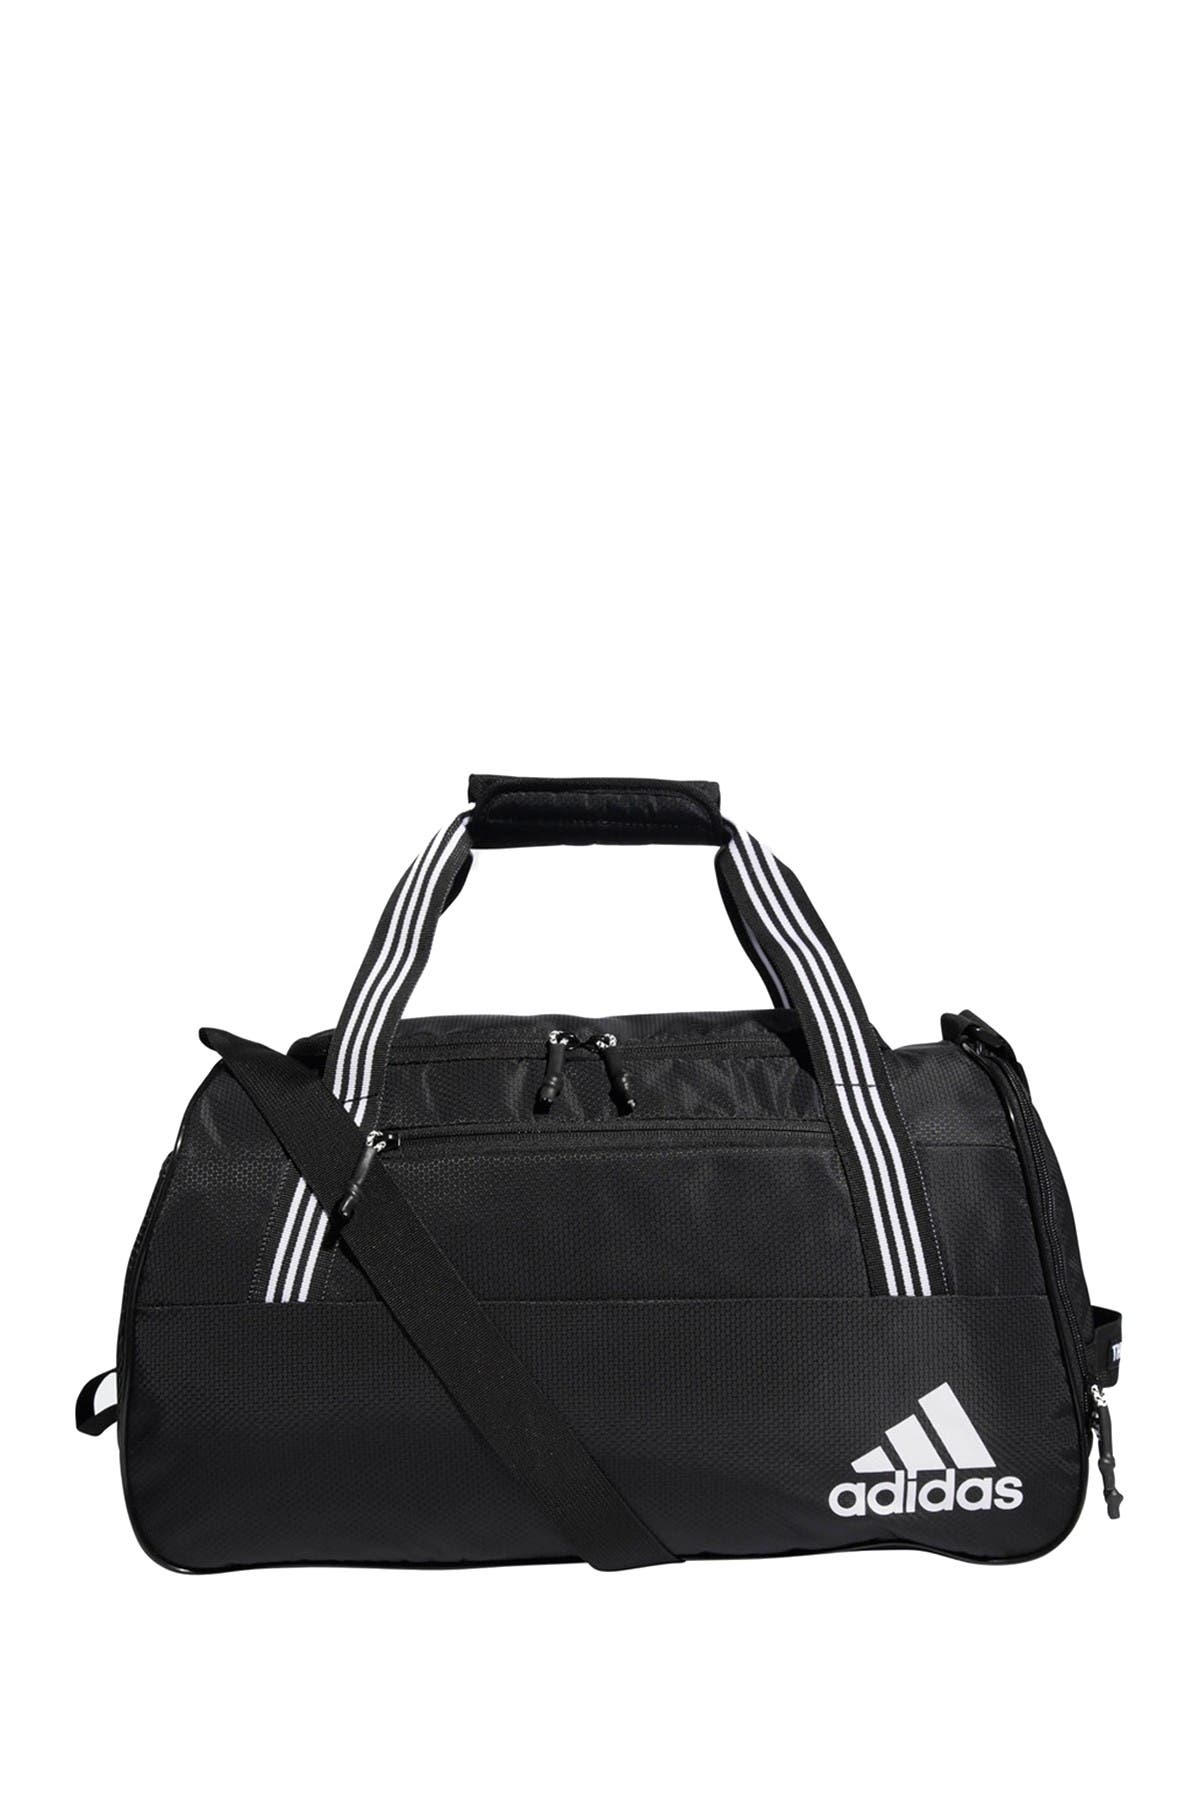 adidas | Squad IV Duffel Bag 